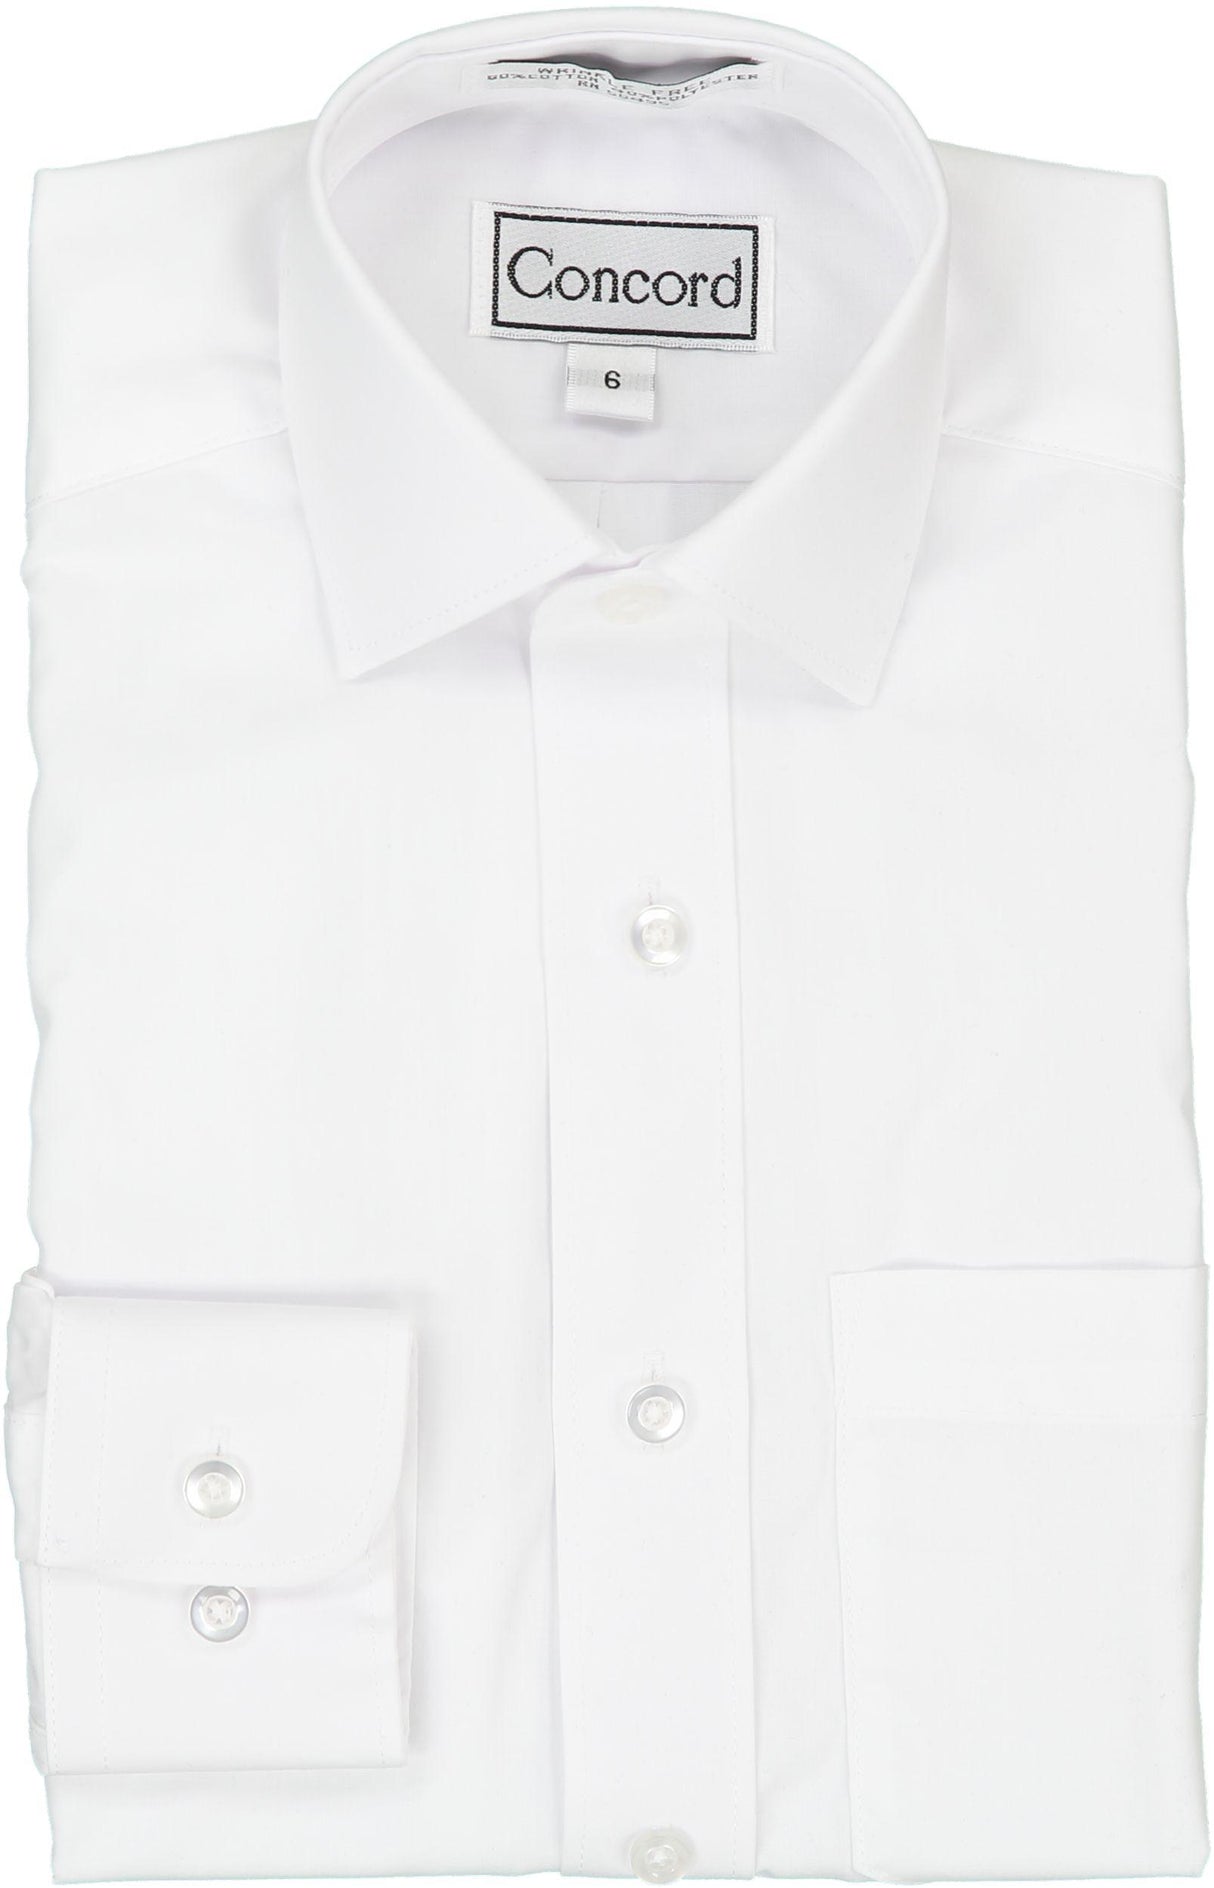 Concord Boys Long Sleeve White Dress Shirt